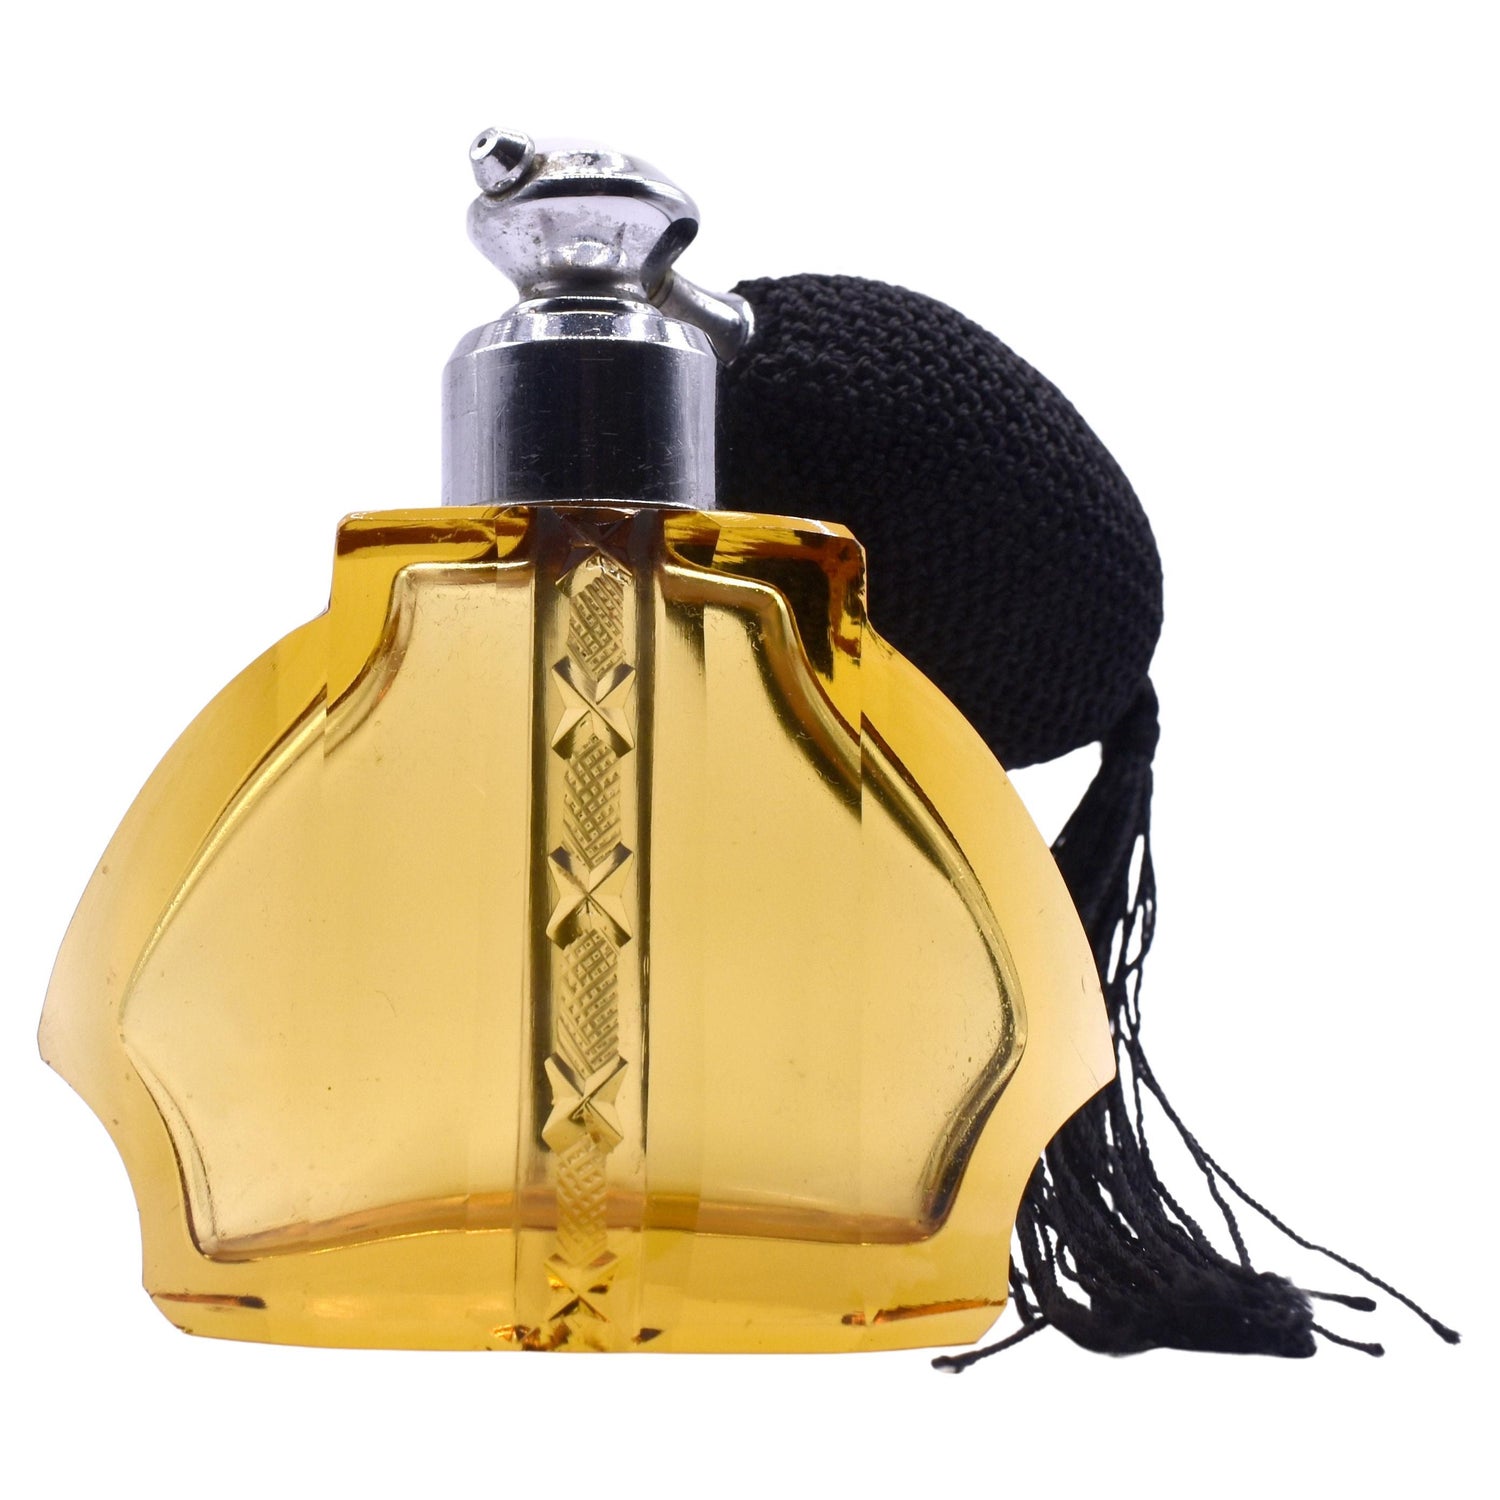 21st Century Marcel Frank French Cut Crystal Vanity Perfume Bottle Atomizer